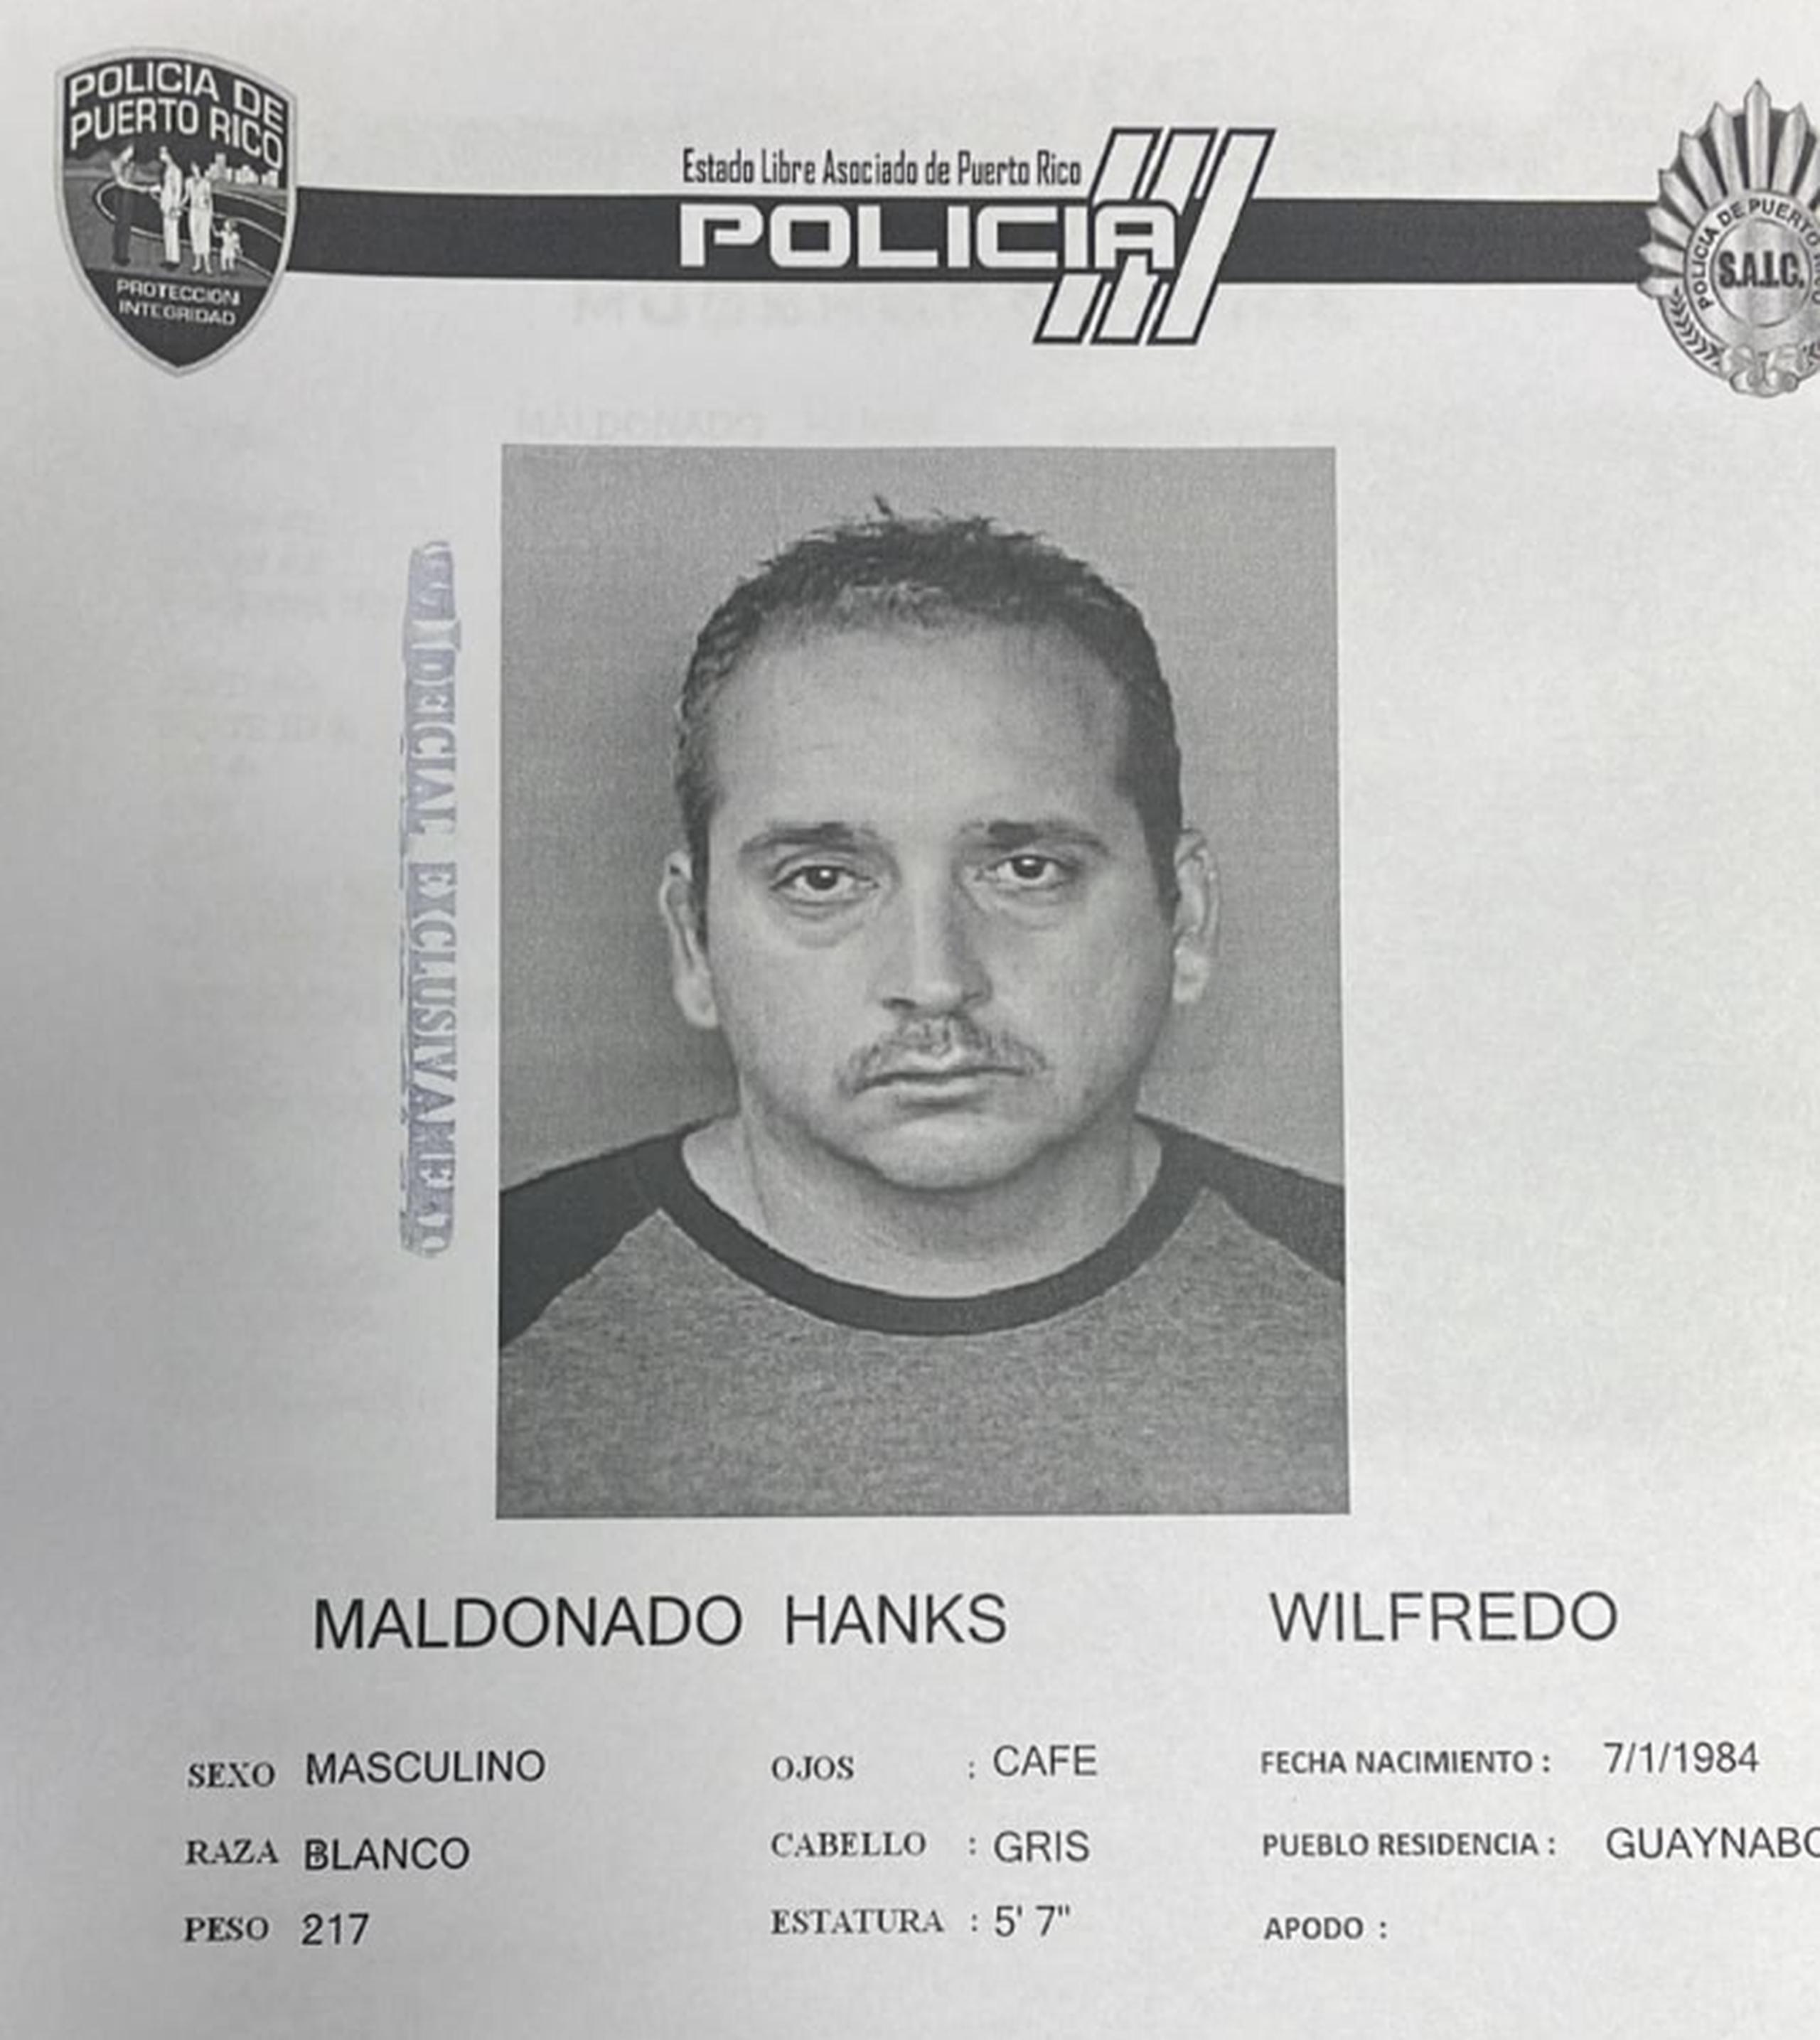 Wilfredo Maldonado Hanks enfrenta cargos por maltrato de menores.